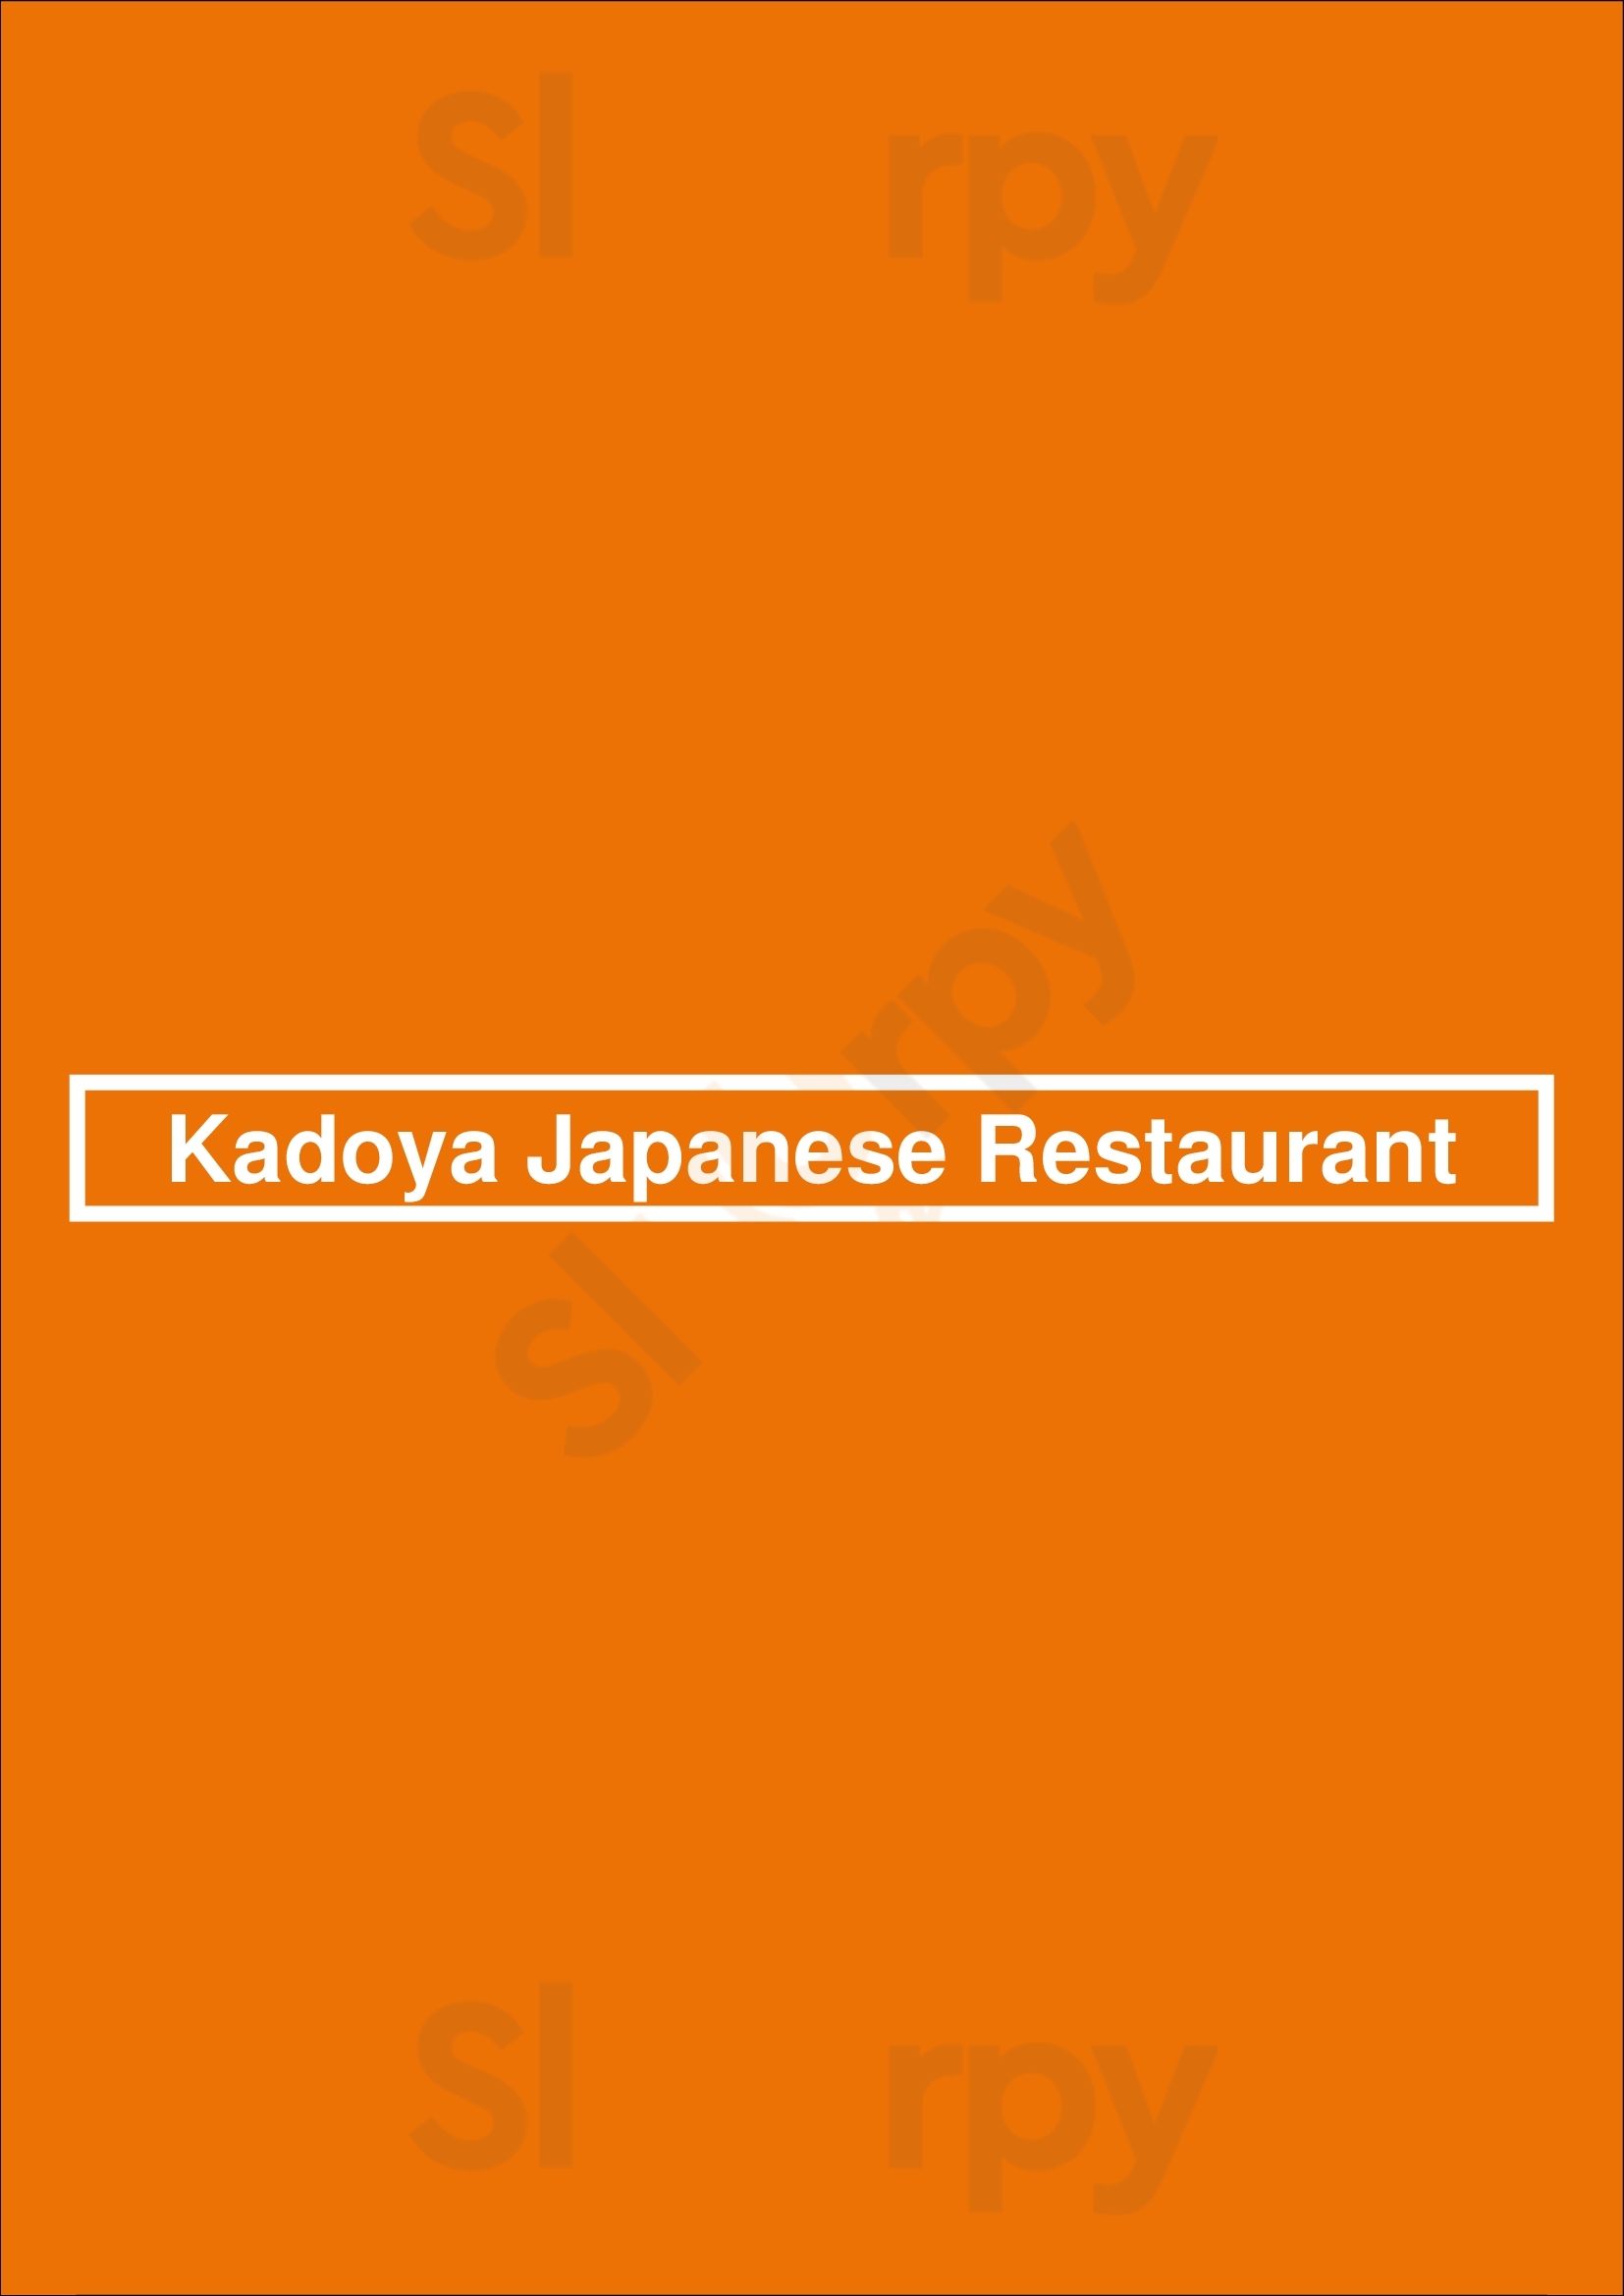 Kadoya Japanese Restaurant Vancouver Menu - 1